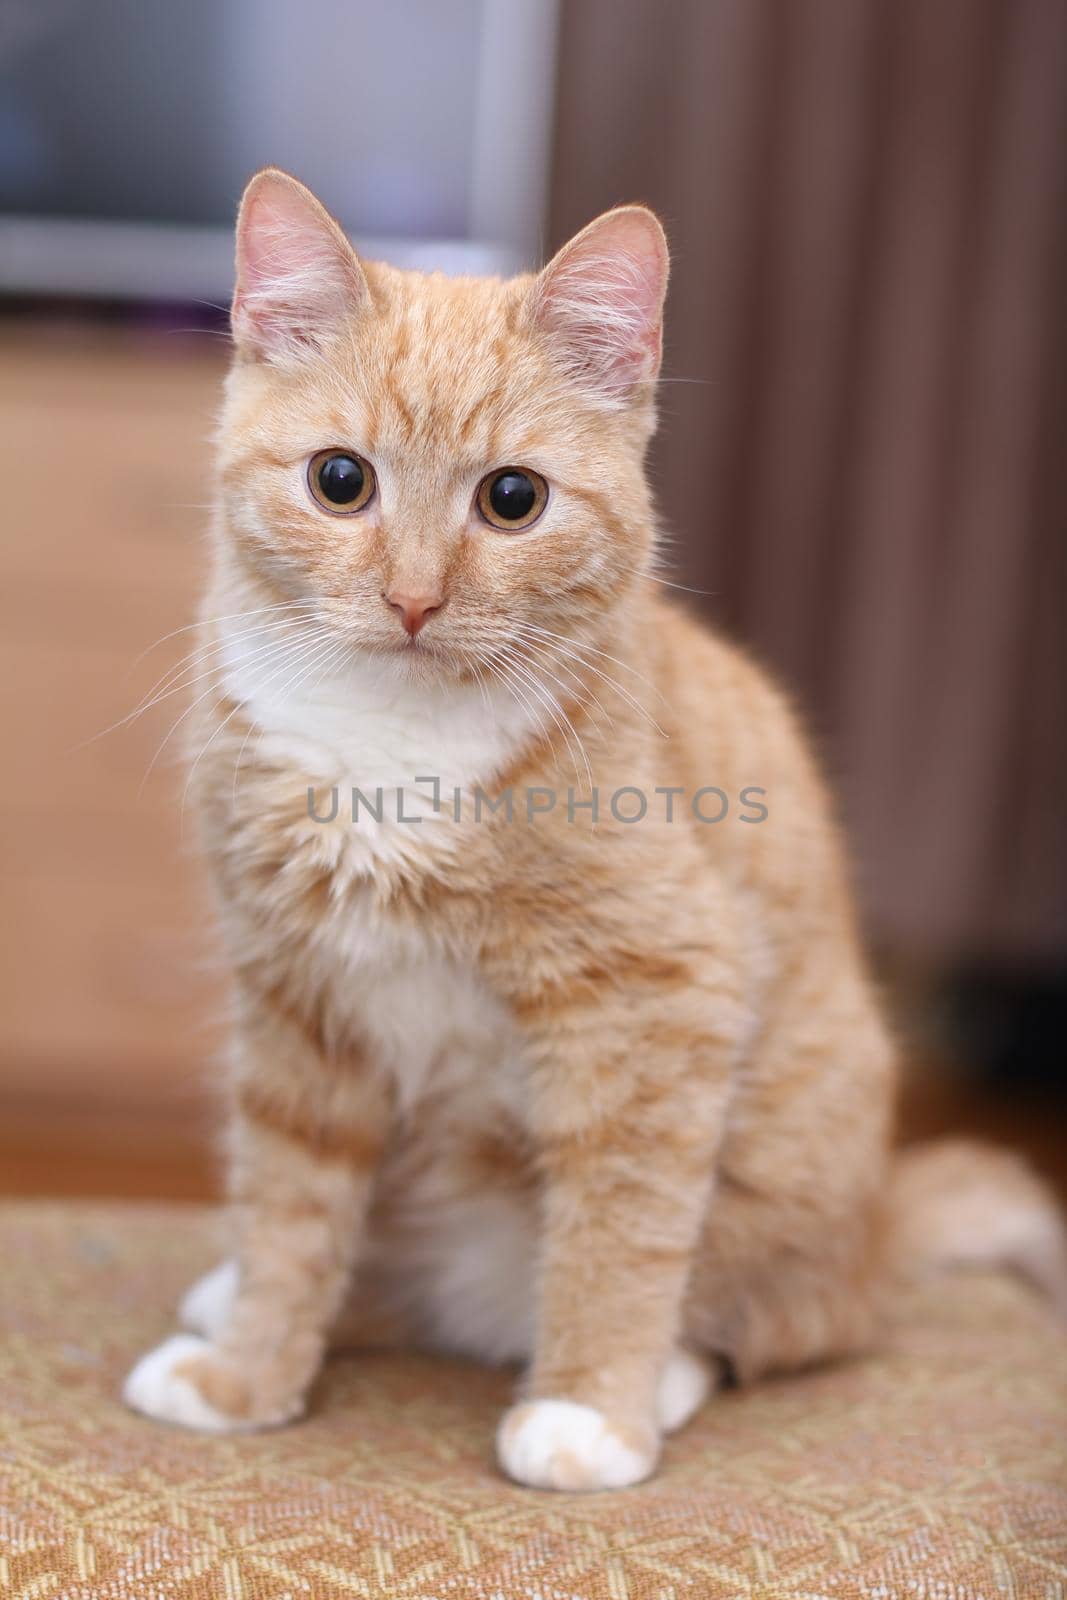 red cat looks at camera big cute eyes nice lovely by natashko